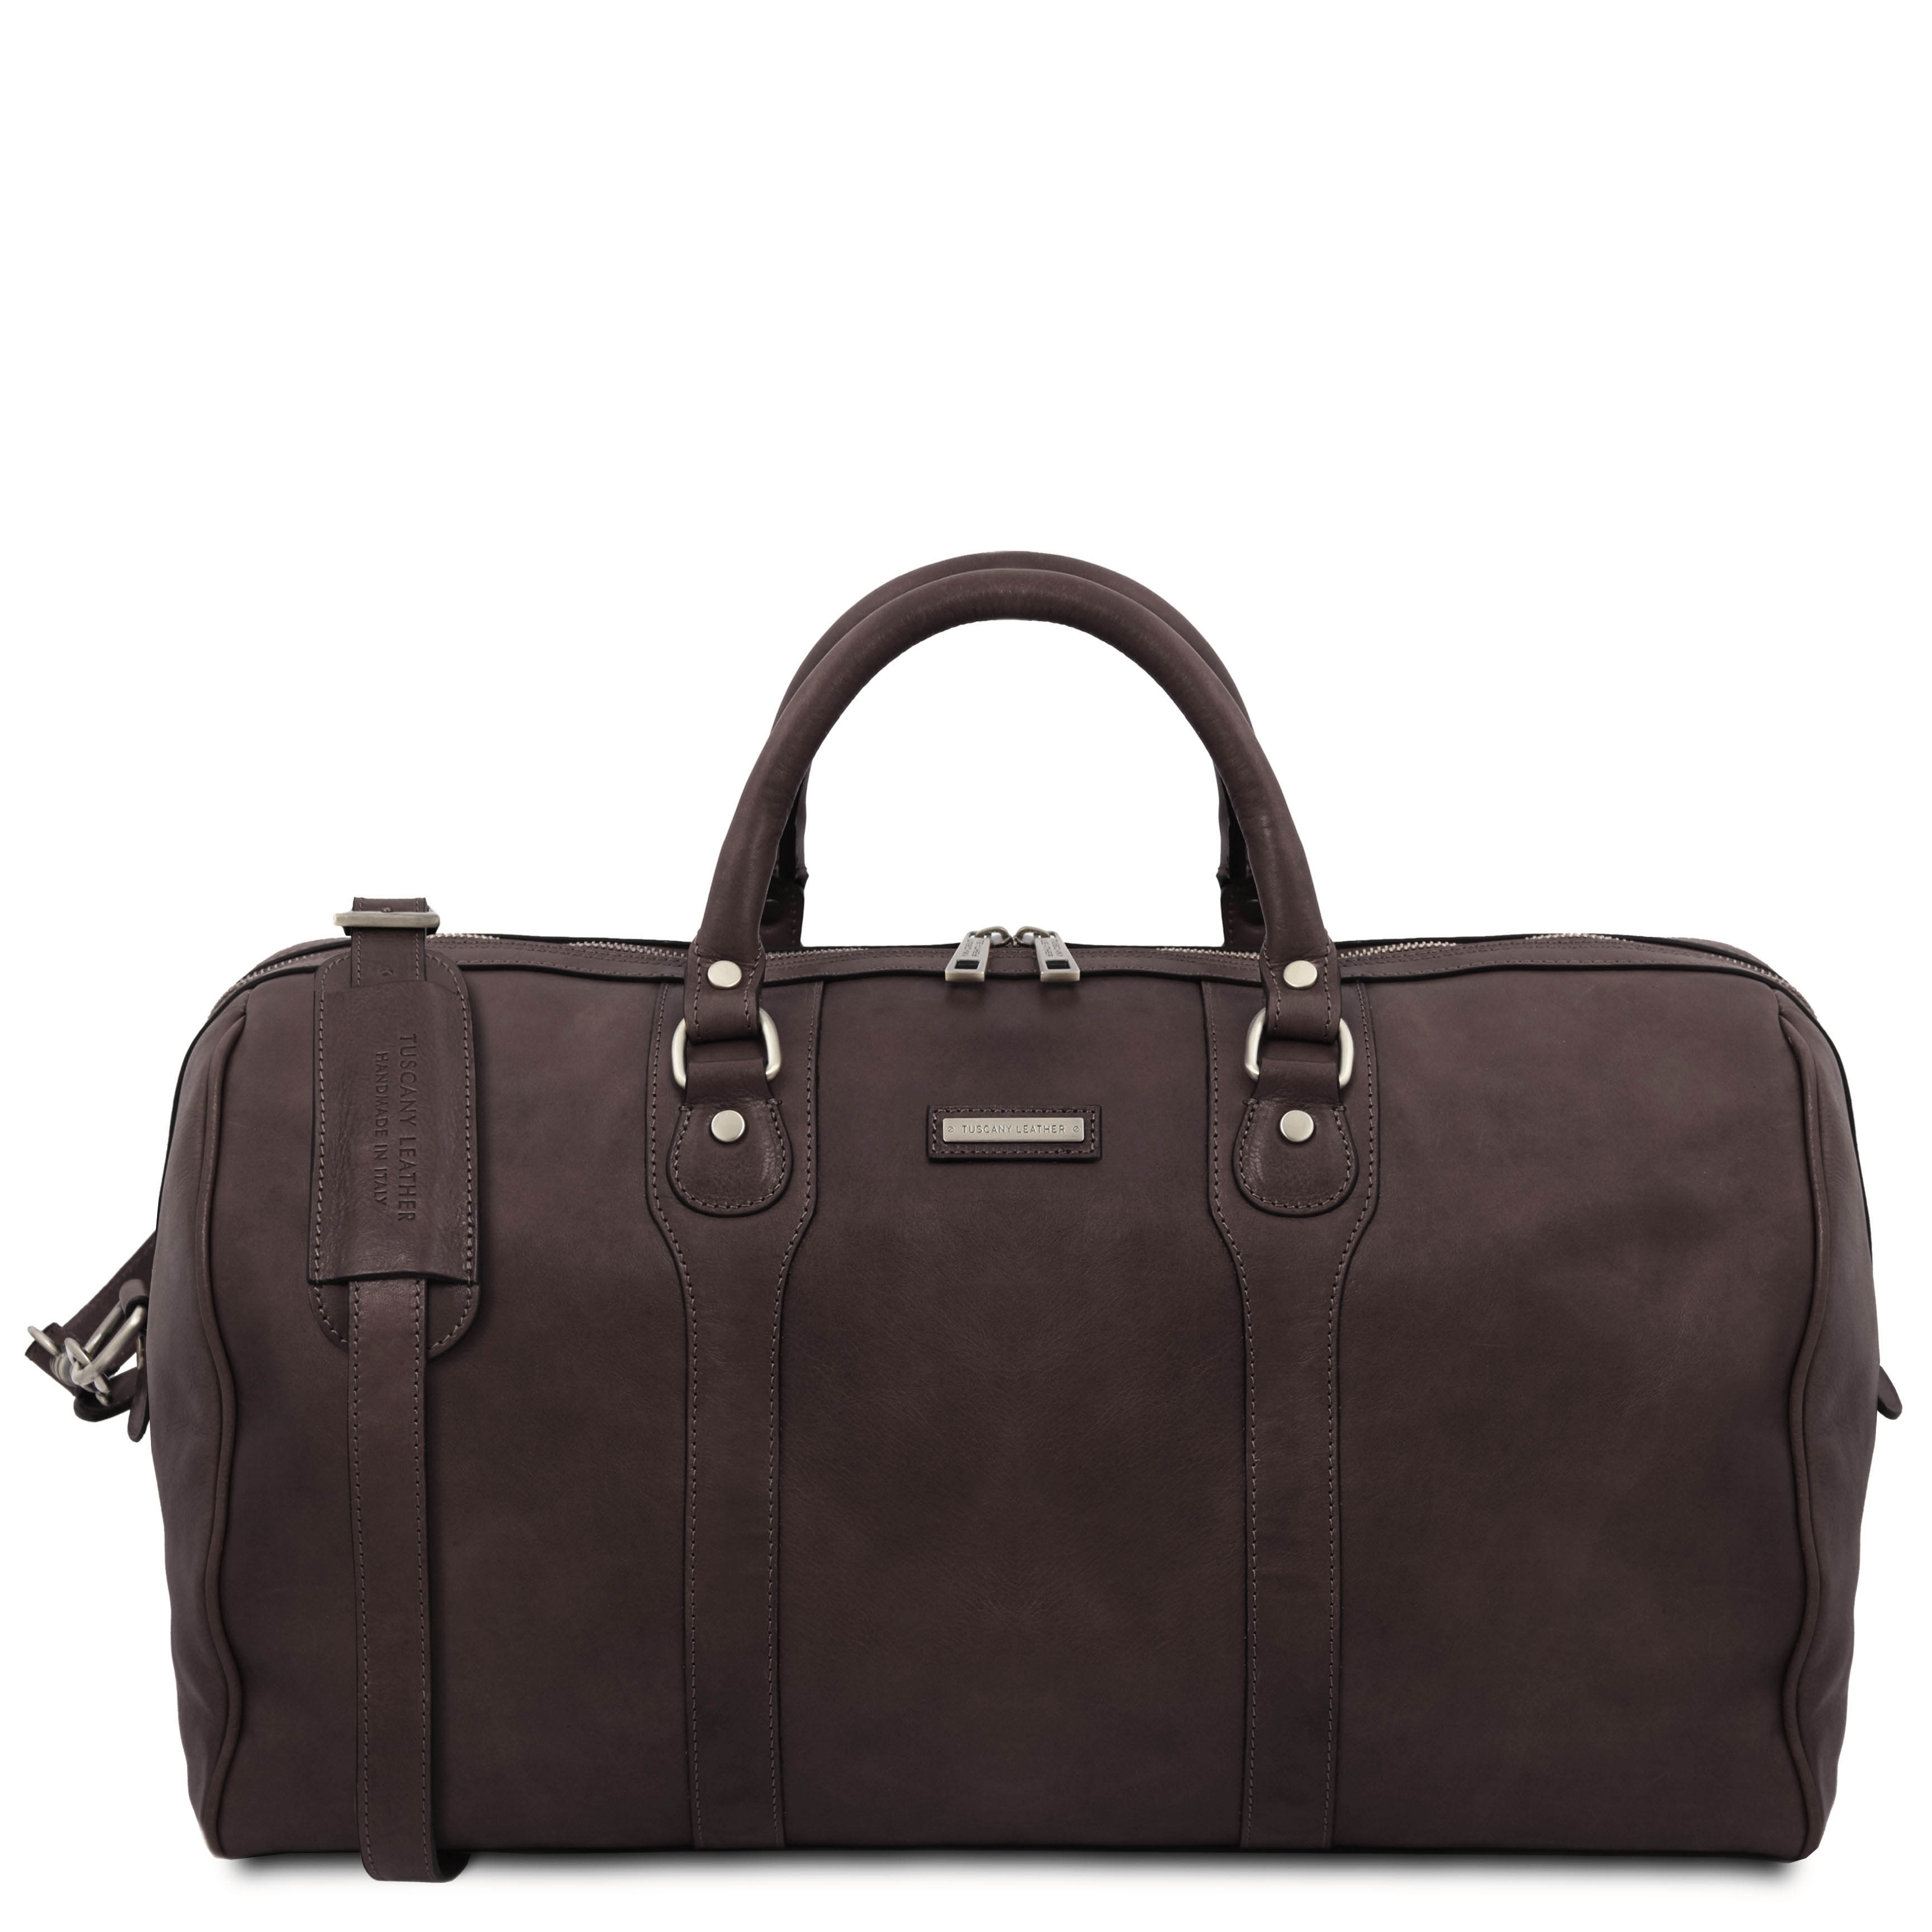 Dark brown large leather bag ⎪Oslo